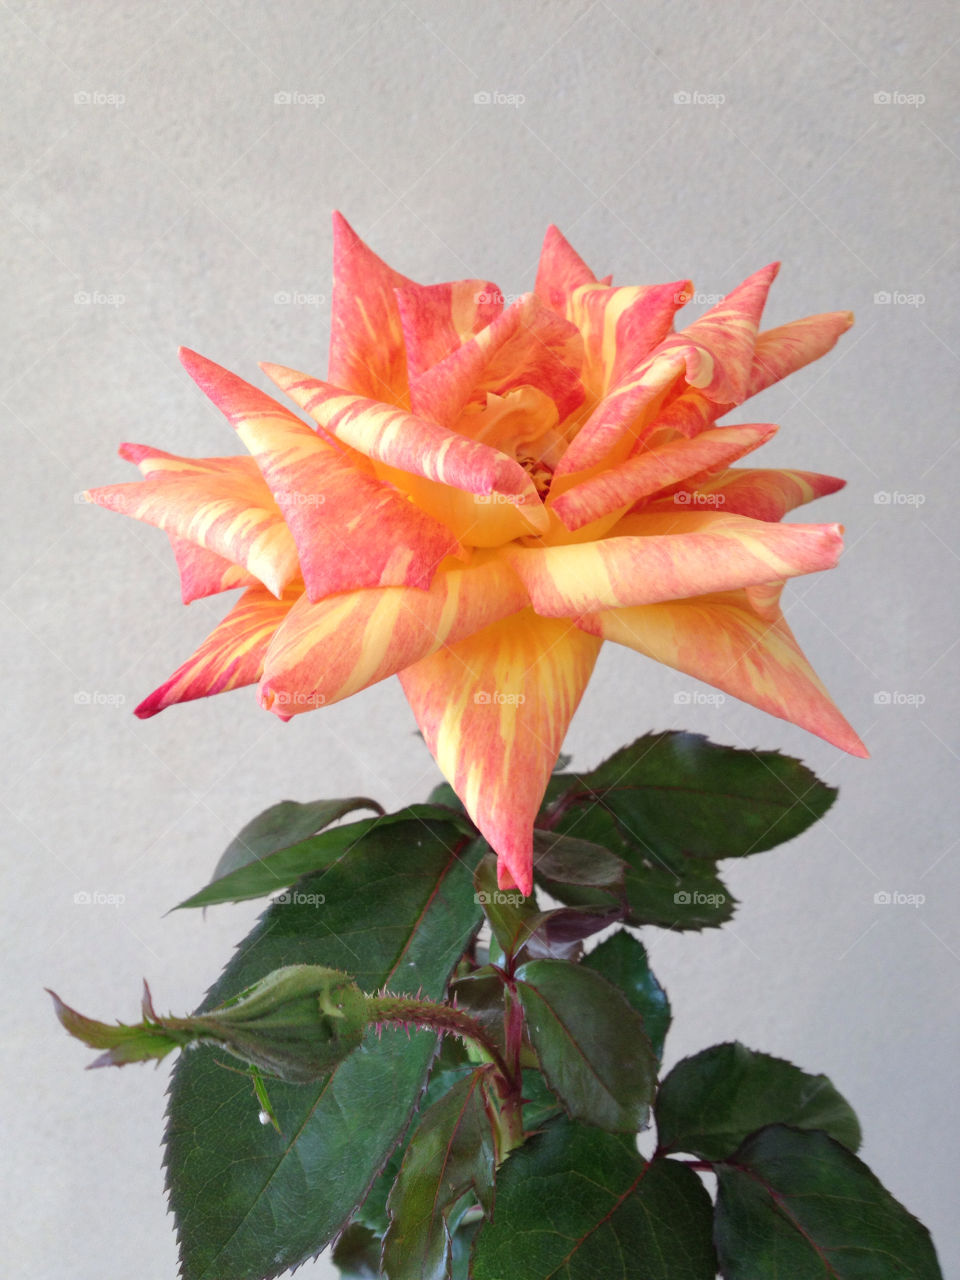 green yellow pink rose by richsanta